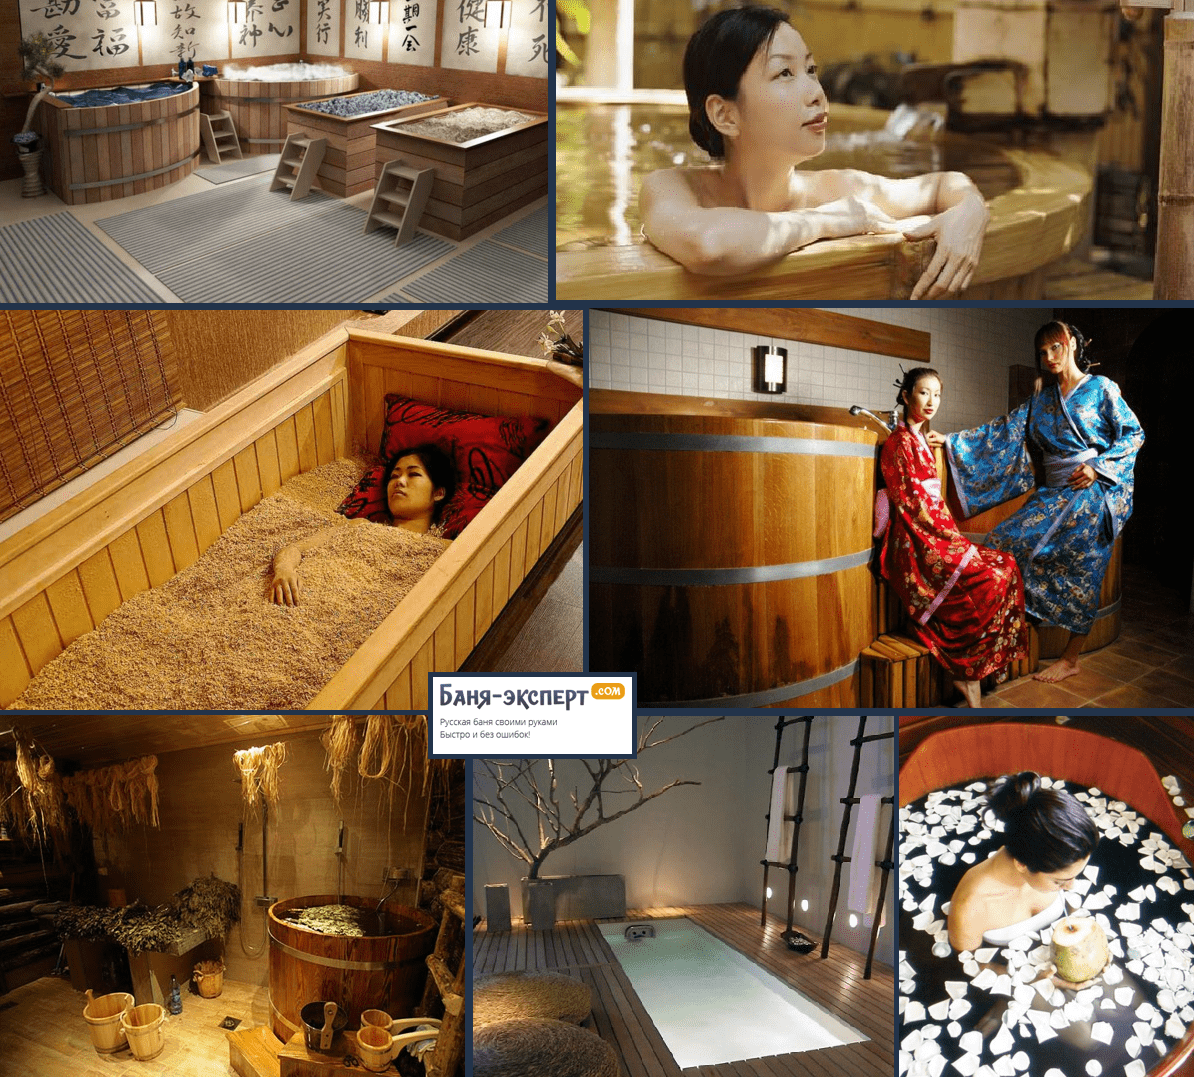 Фурако и офуро - японская баня: устройство, банная процедура